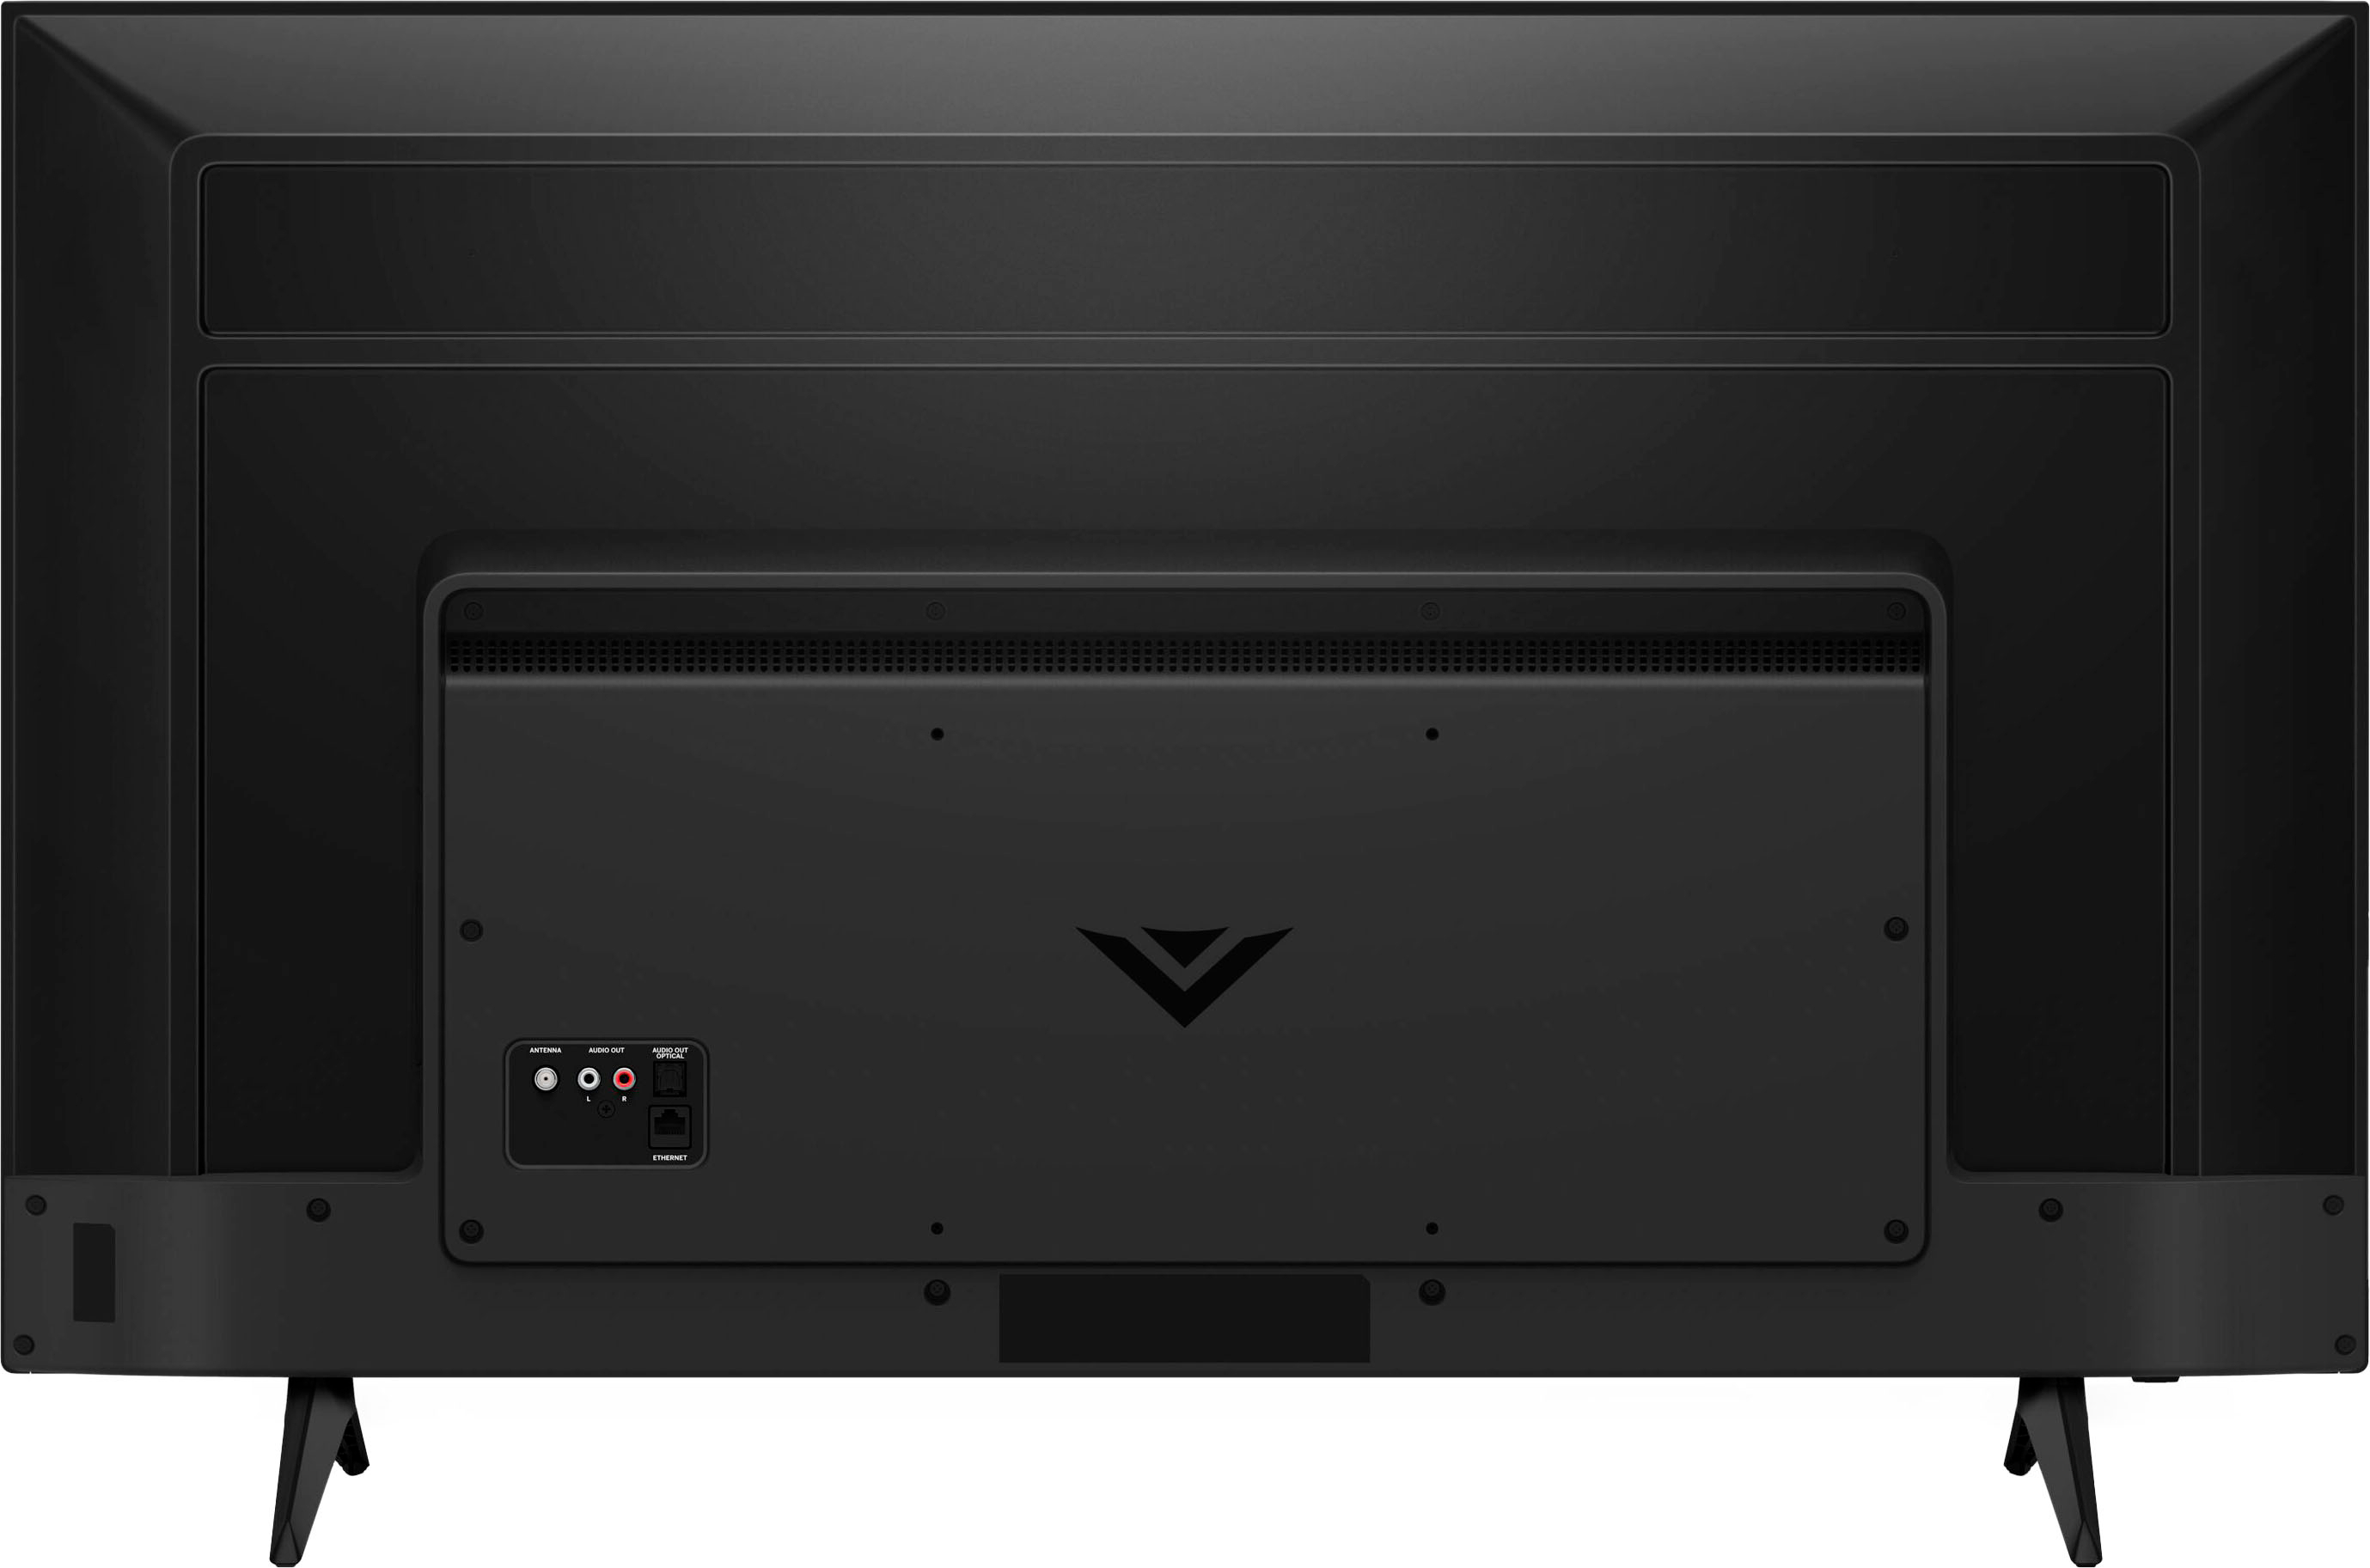 VIZIO 43 Class V-Series 4K UHD LED Smart TV V435-J01 